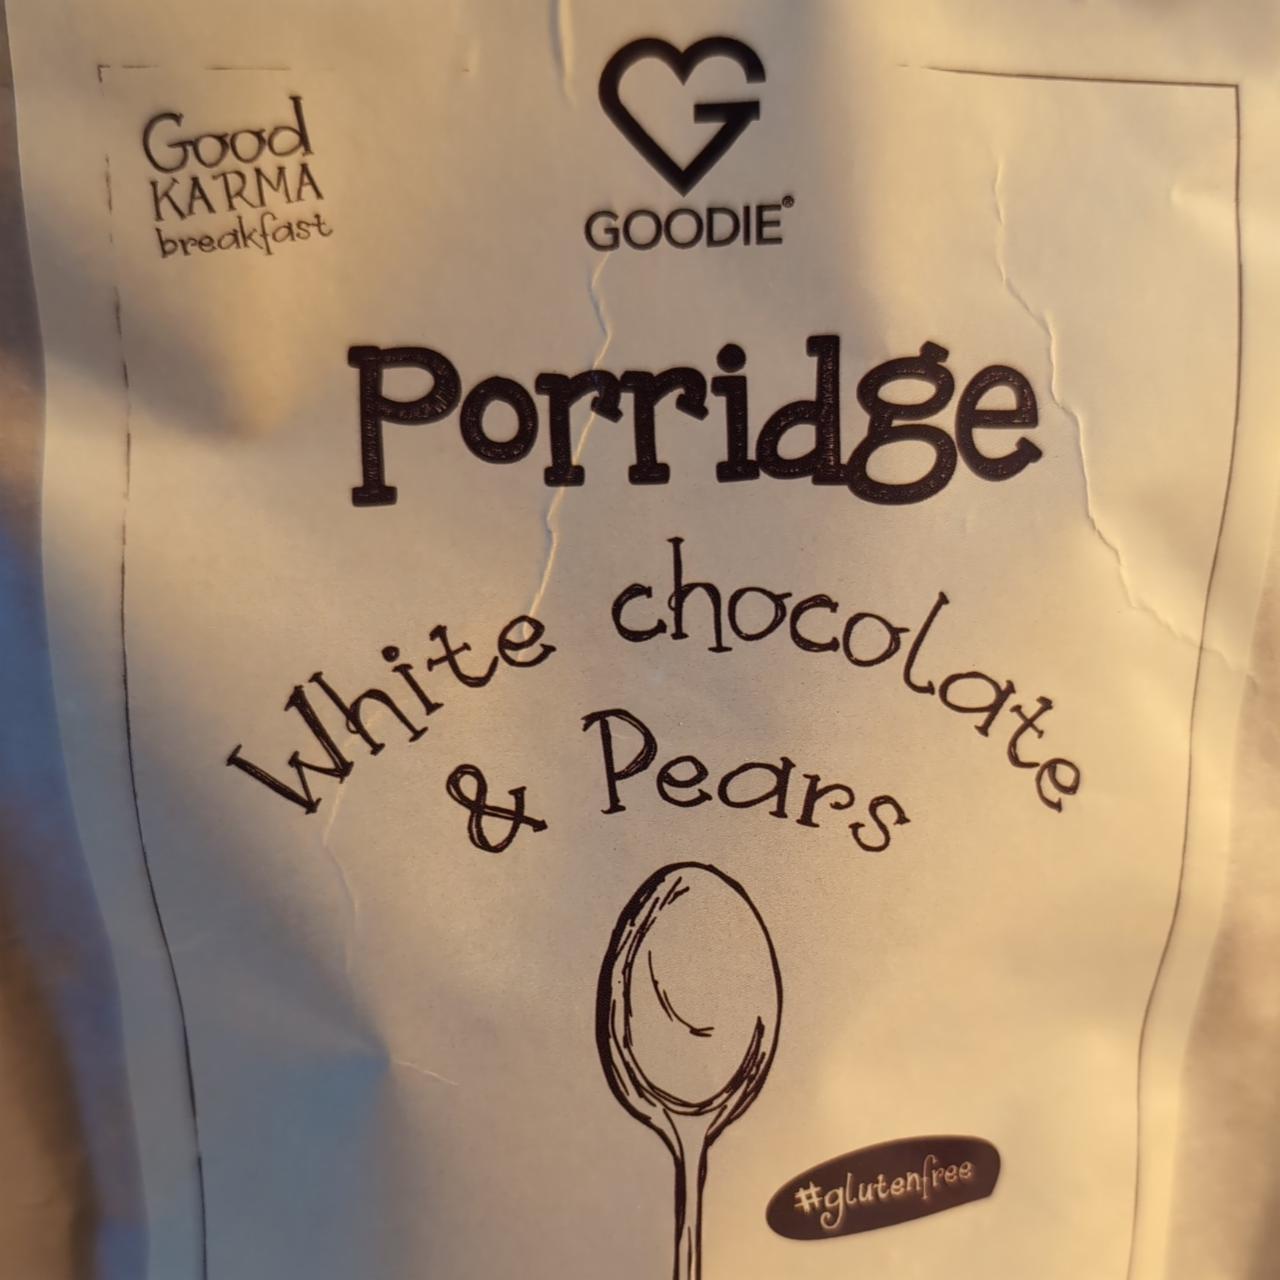 Fotografie - Porridge white chocolate & pears Goodie